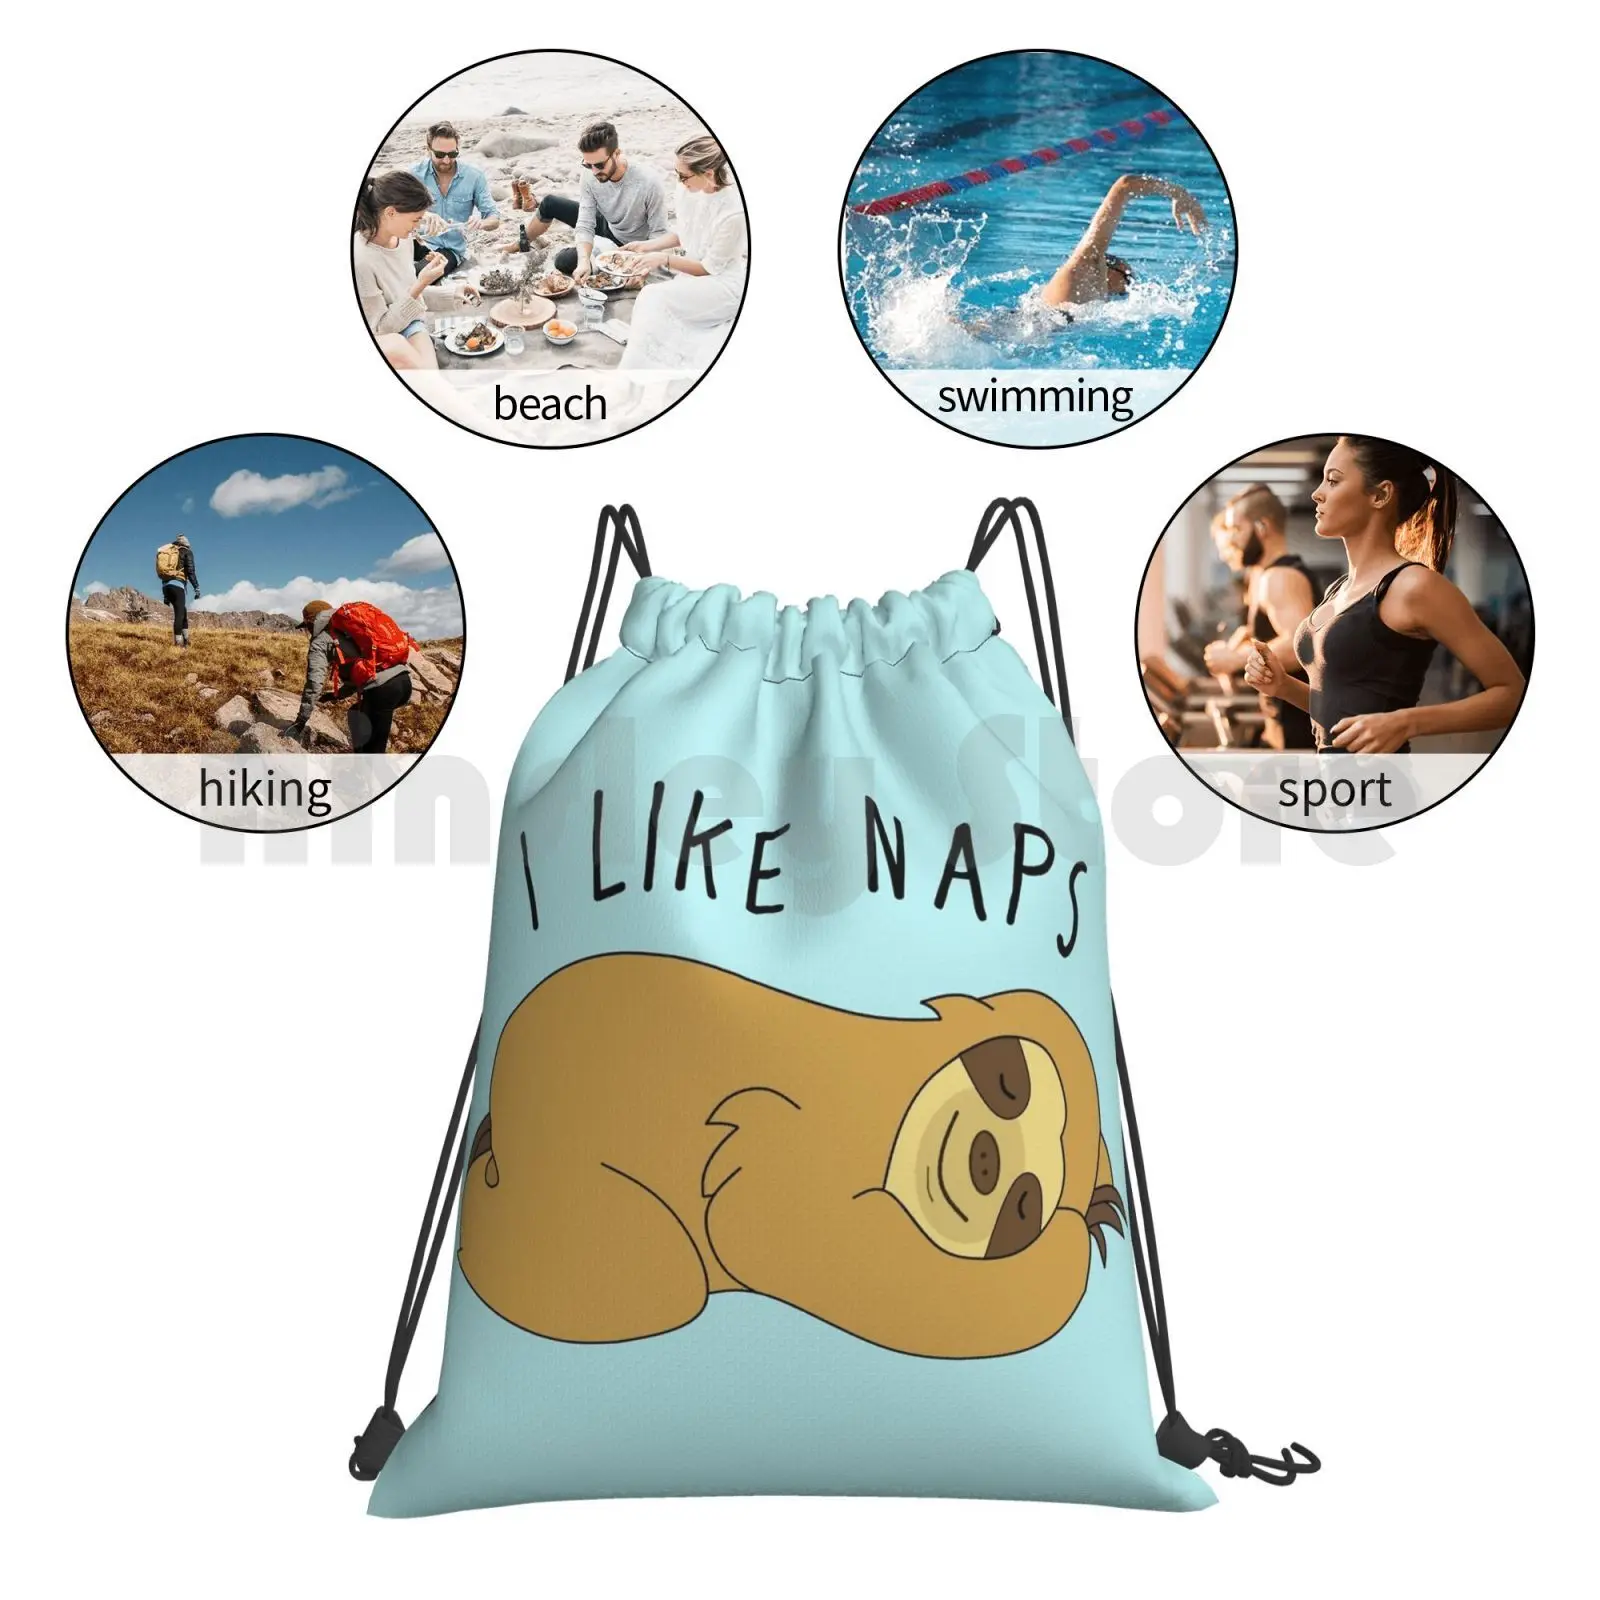 I Like Naps-Sloth Backpack Drawstring Bags Gym Bag Waterproof Sloth Sloths Naps Nap Napping Sleep Sleep Band Fun Funny images - 6